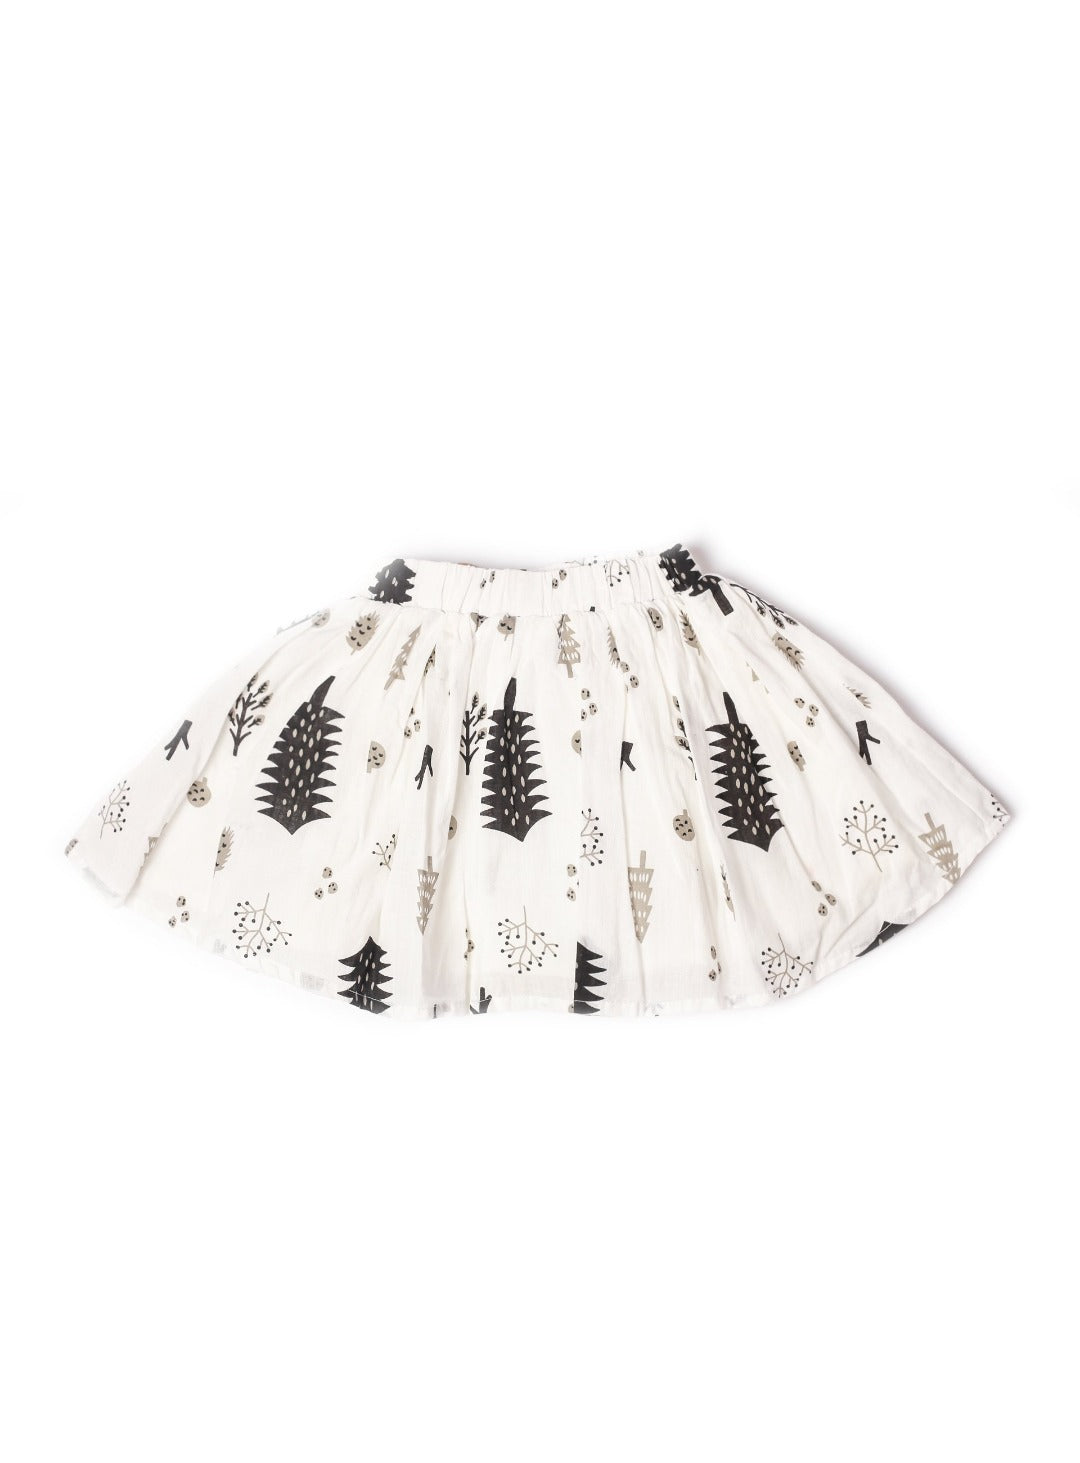 linen white skirt with pine trees print